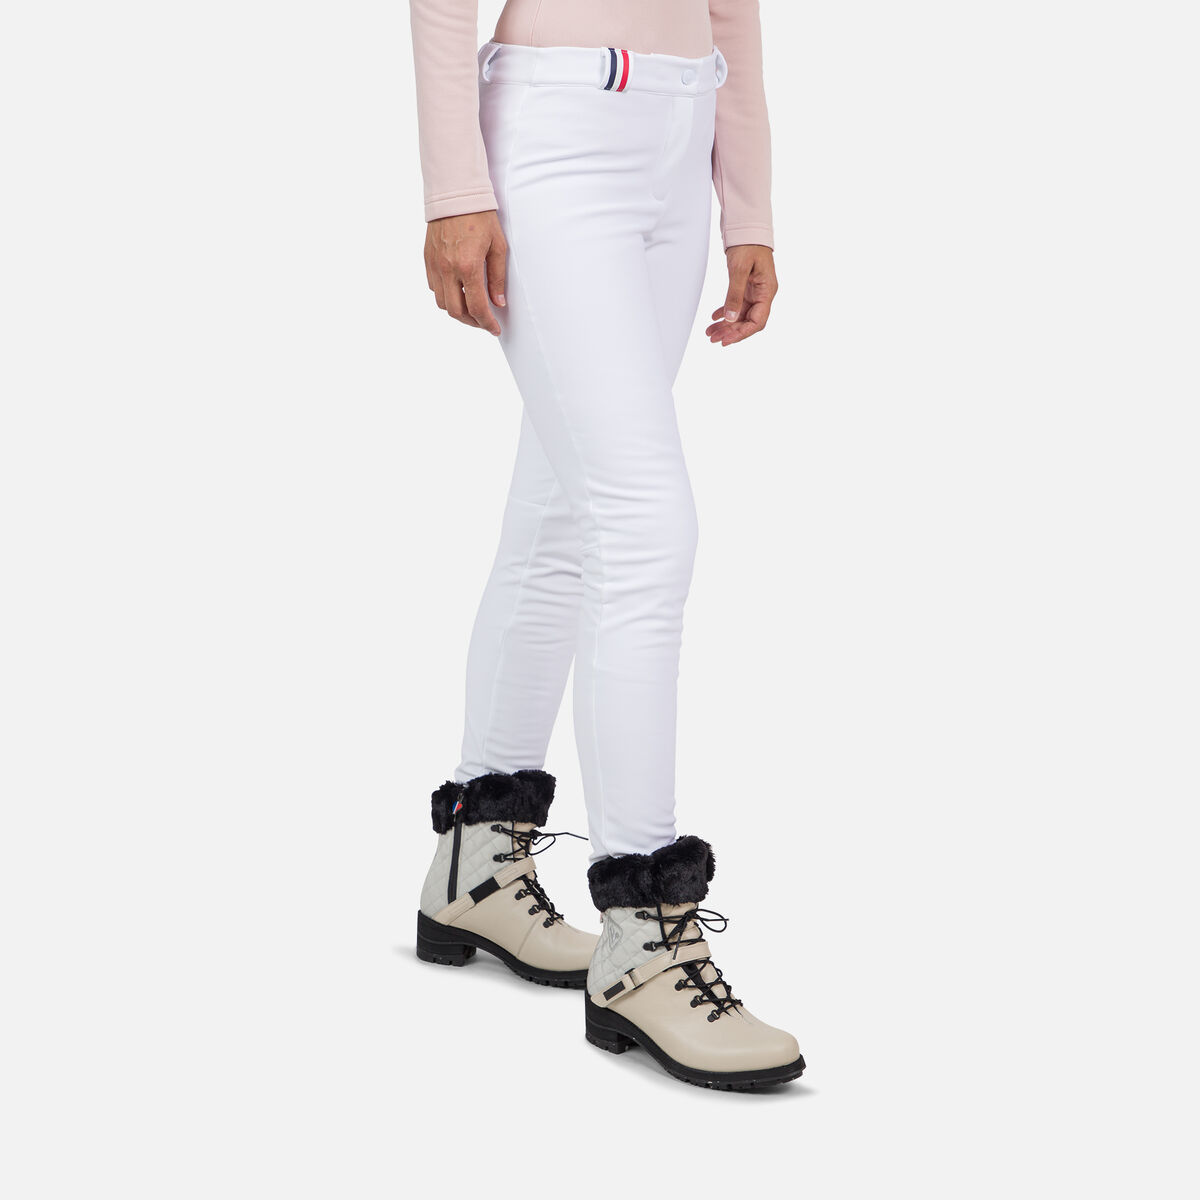 Women's Ski Fuseau Pants